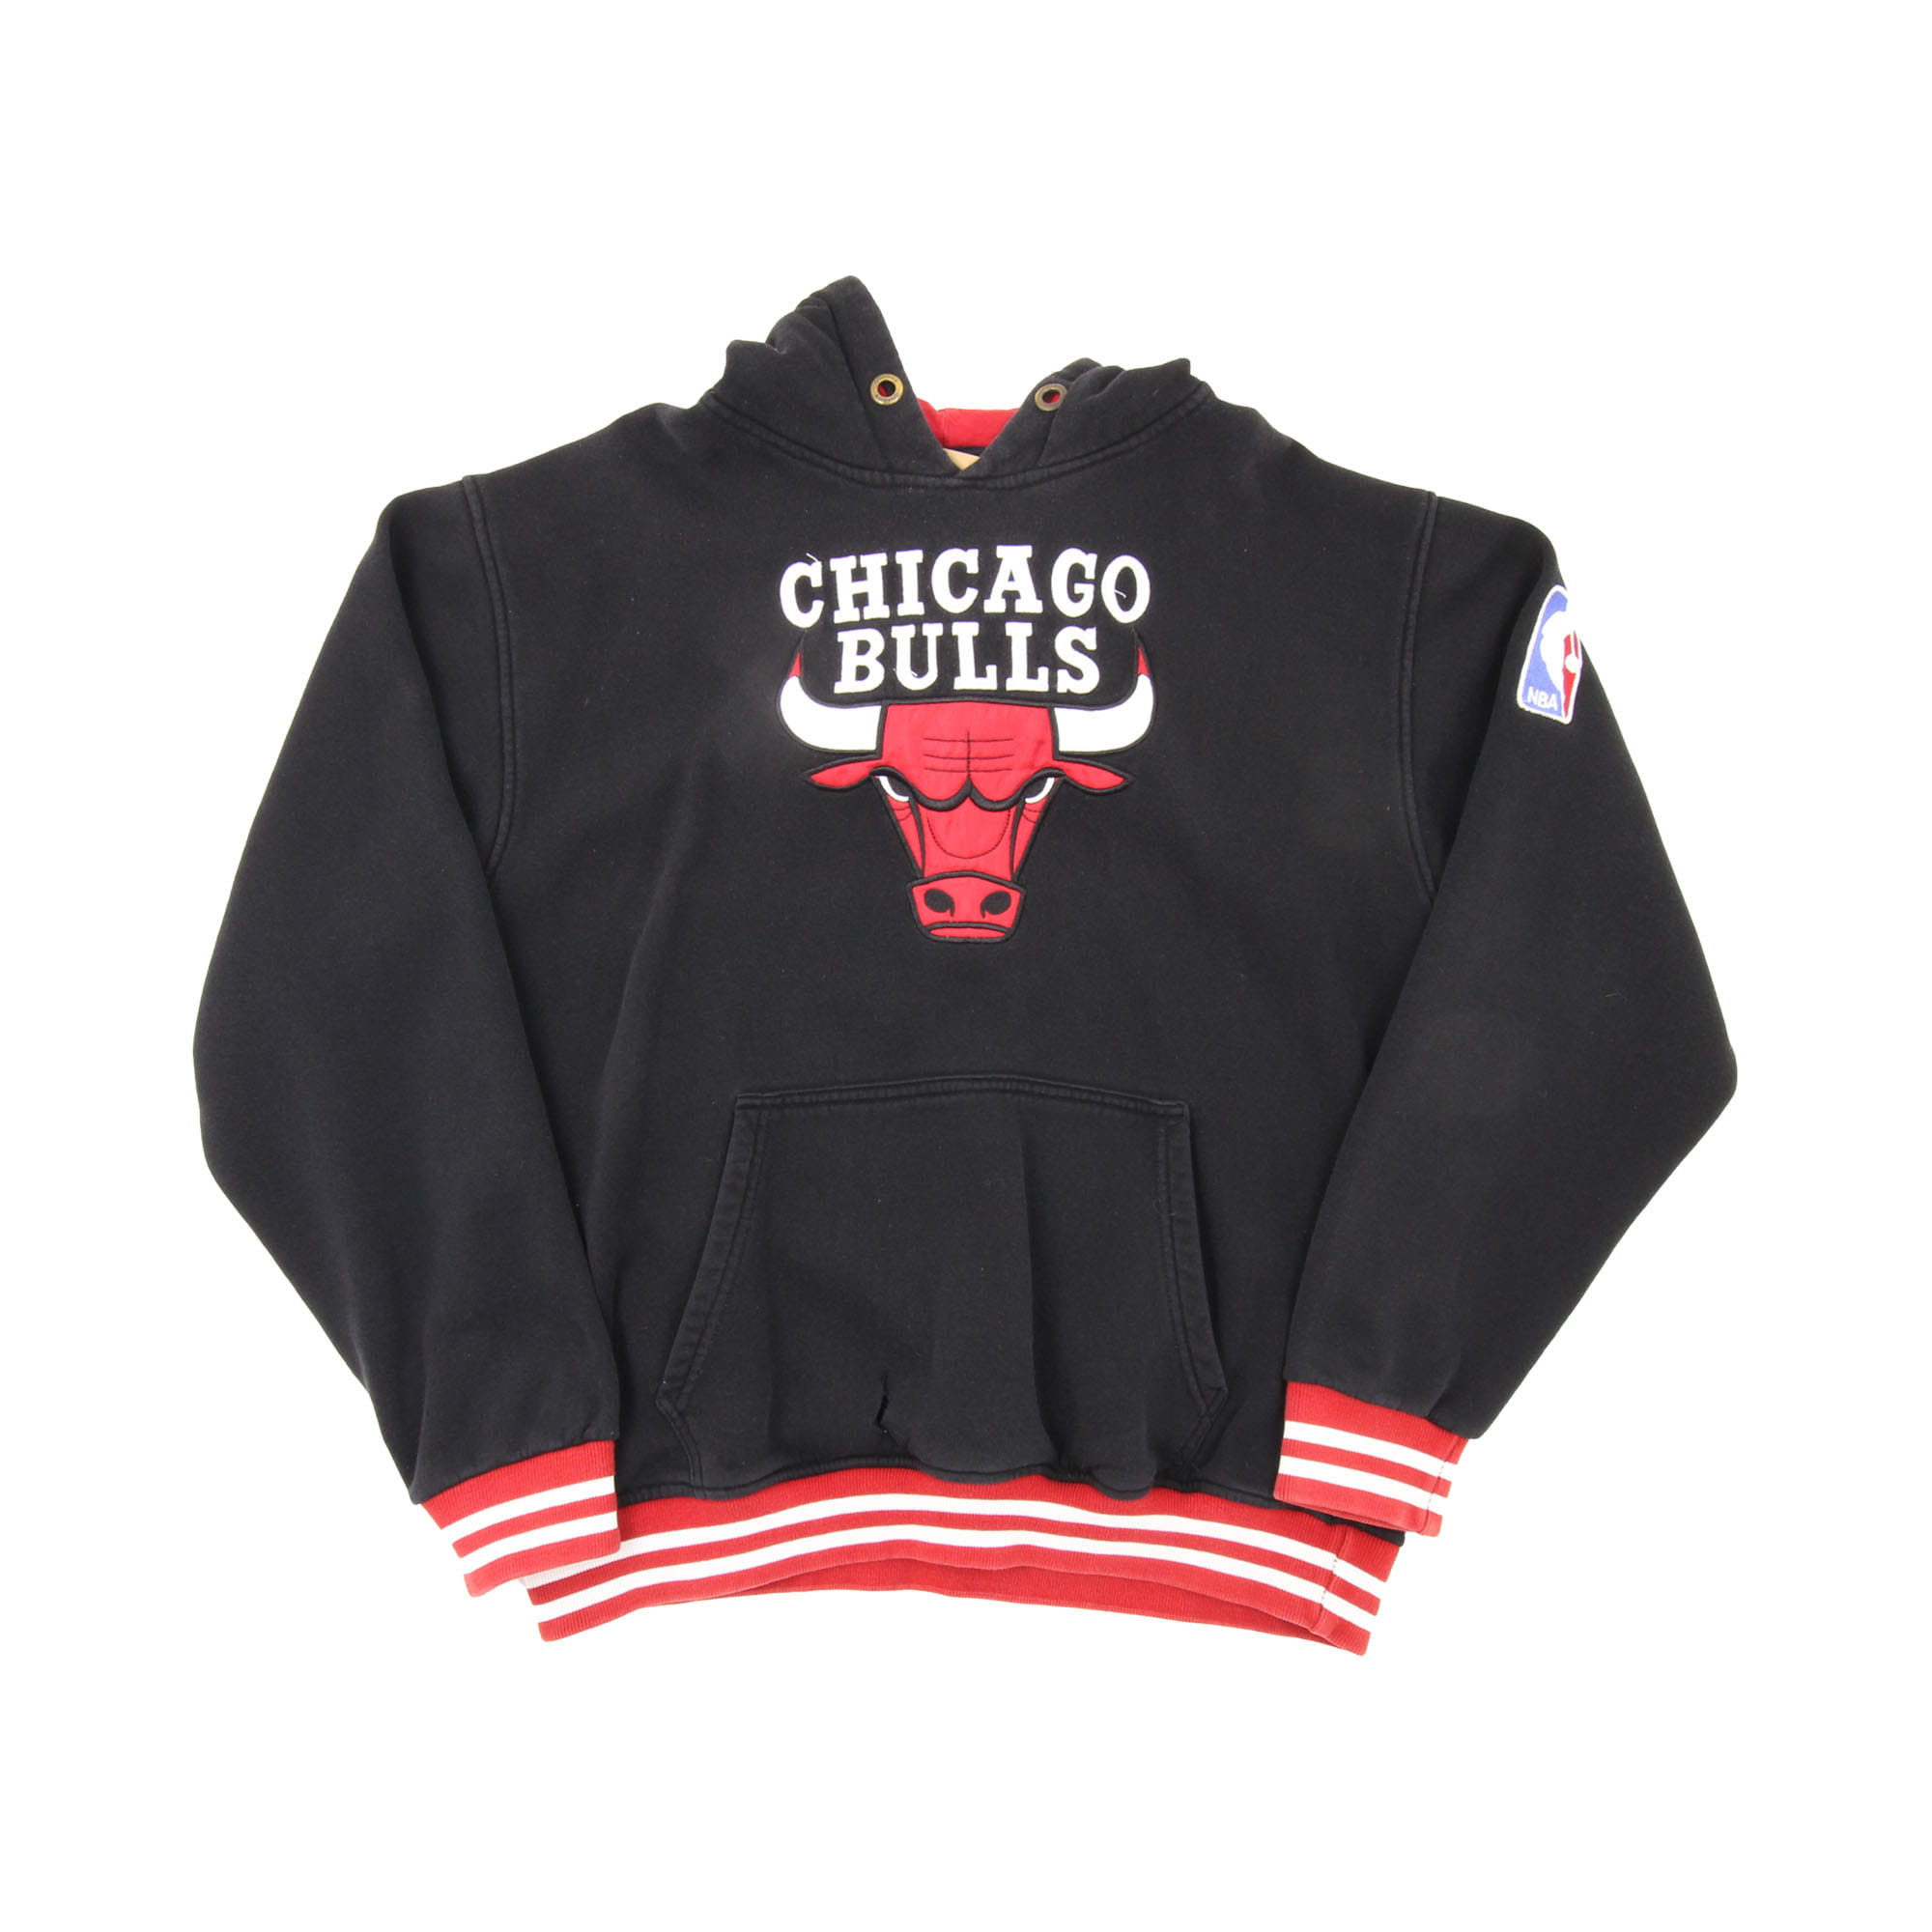 Adidas Chicago Bulls Hoodie Black - XL